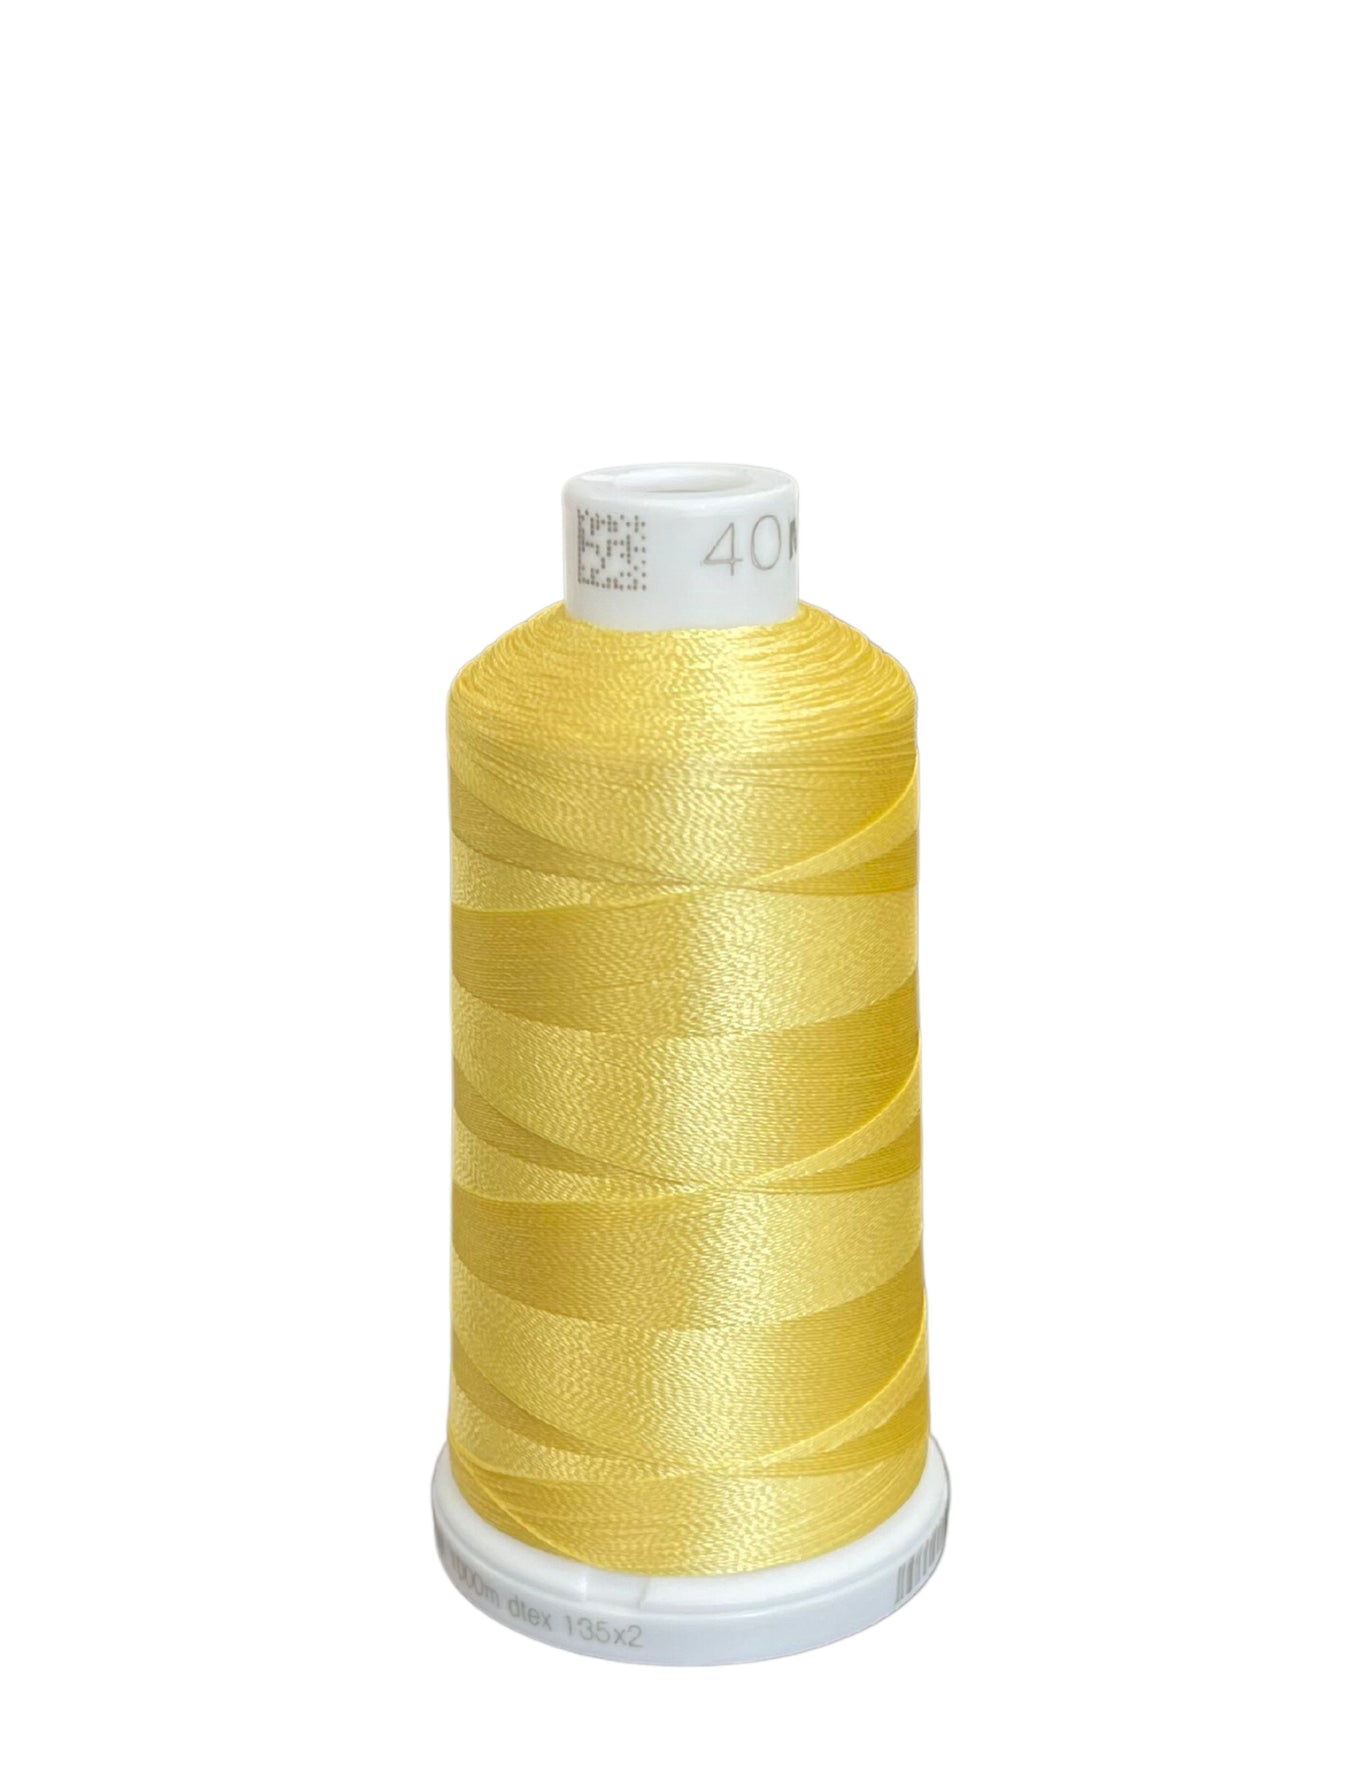 Madeira FS Metallic #40 Embroidery Thread - Spools 1,100 yds Gold